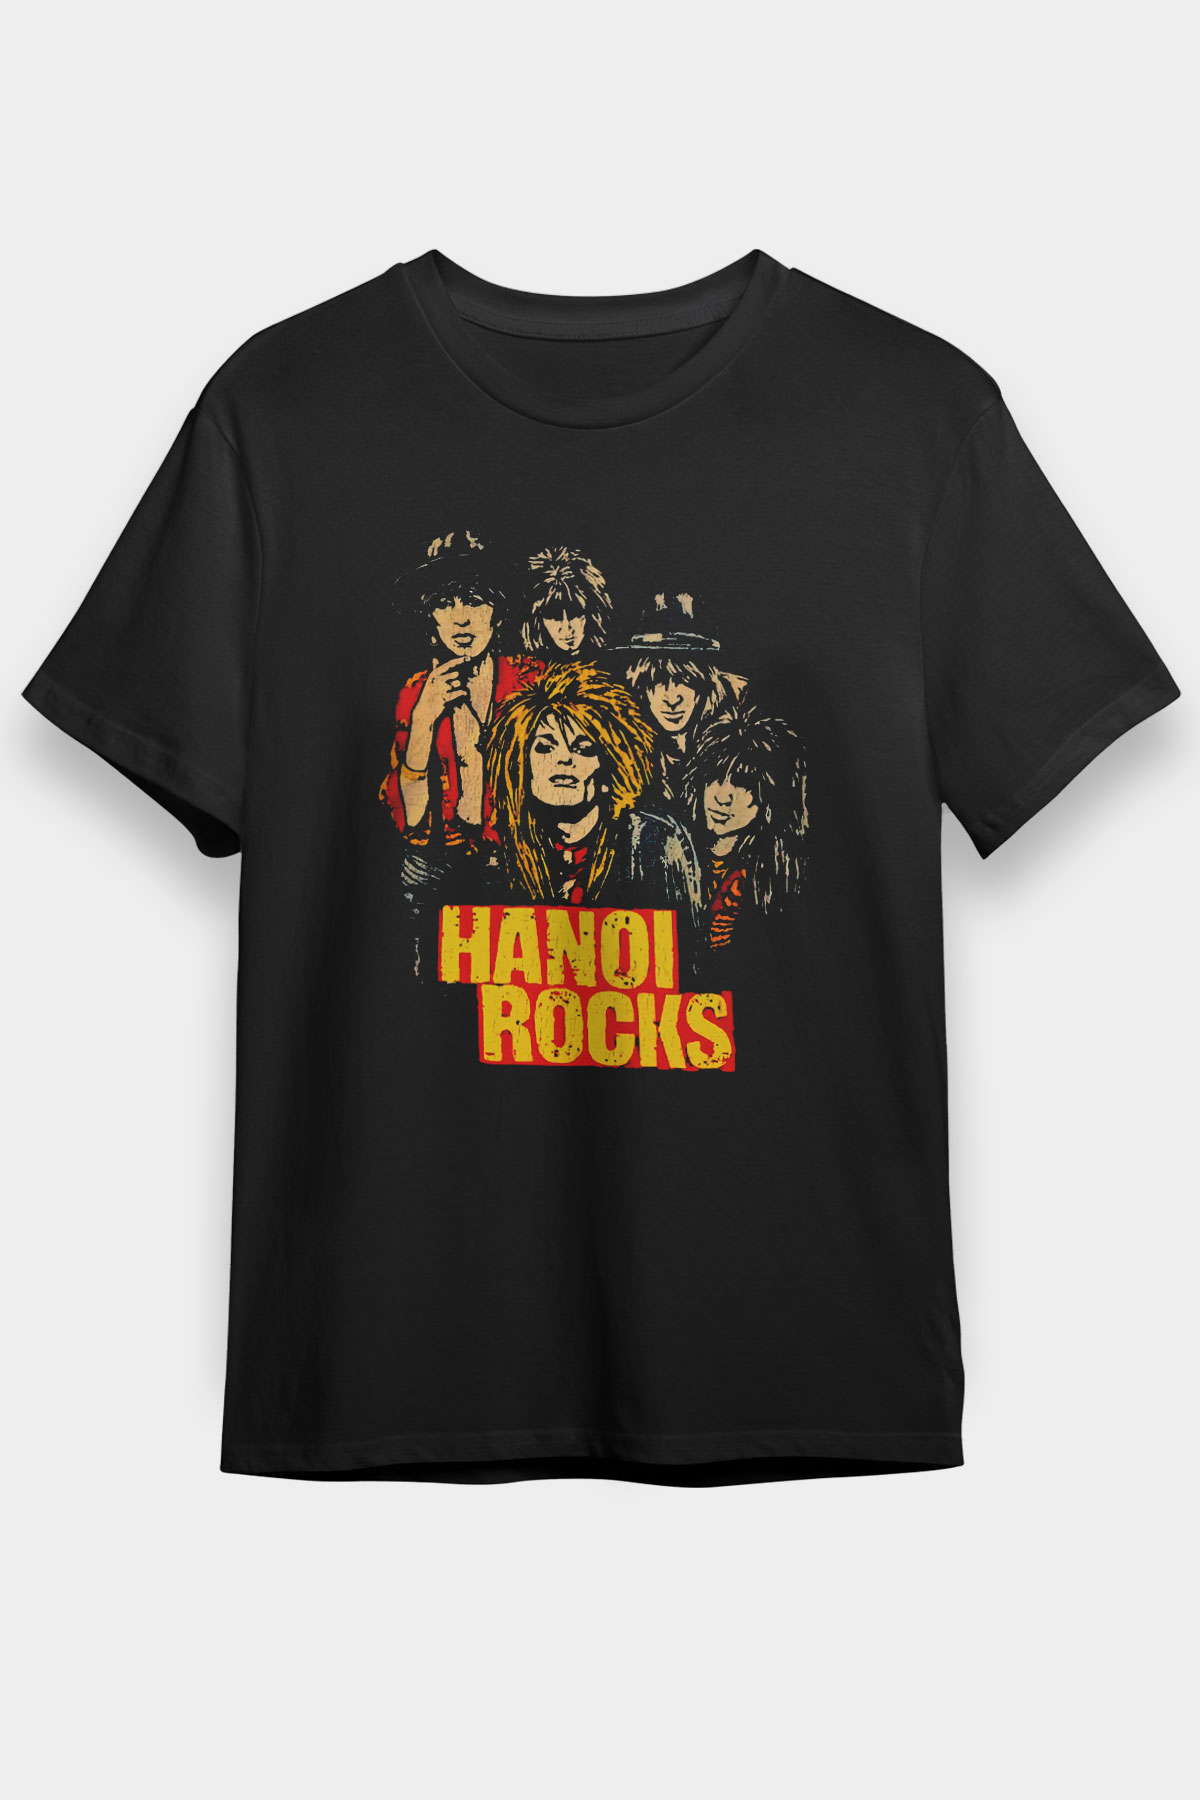 Hanoi Rocks T shirt, Music Band ,Unisex Tshirt 11/